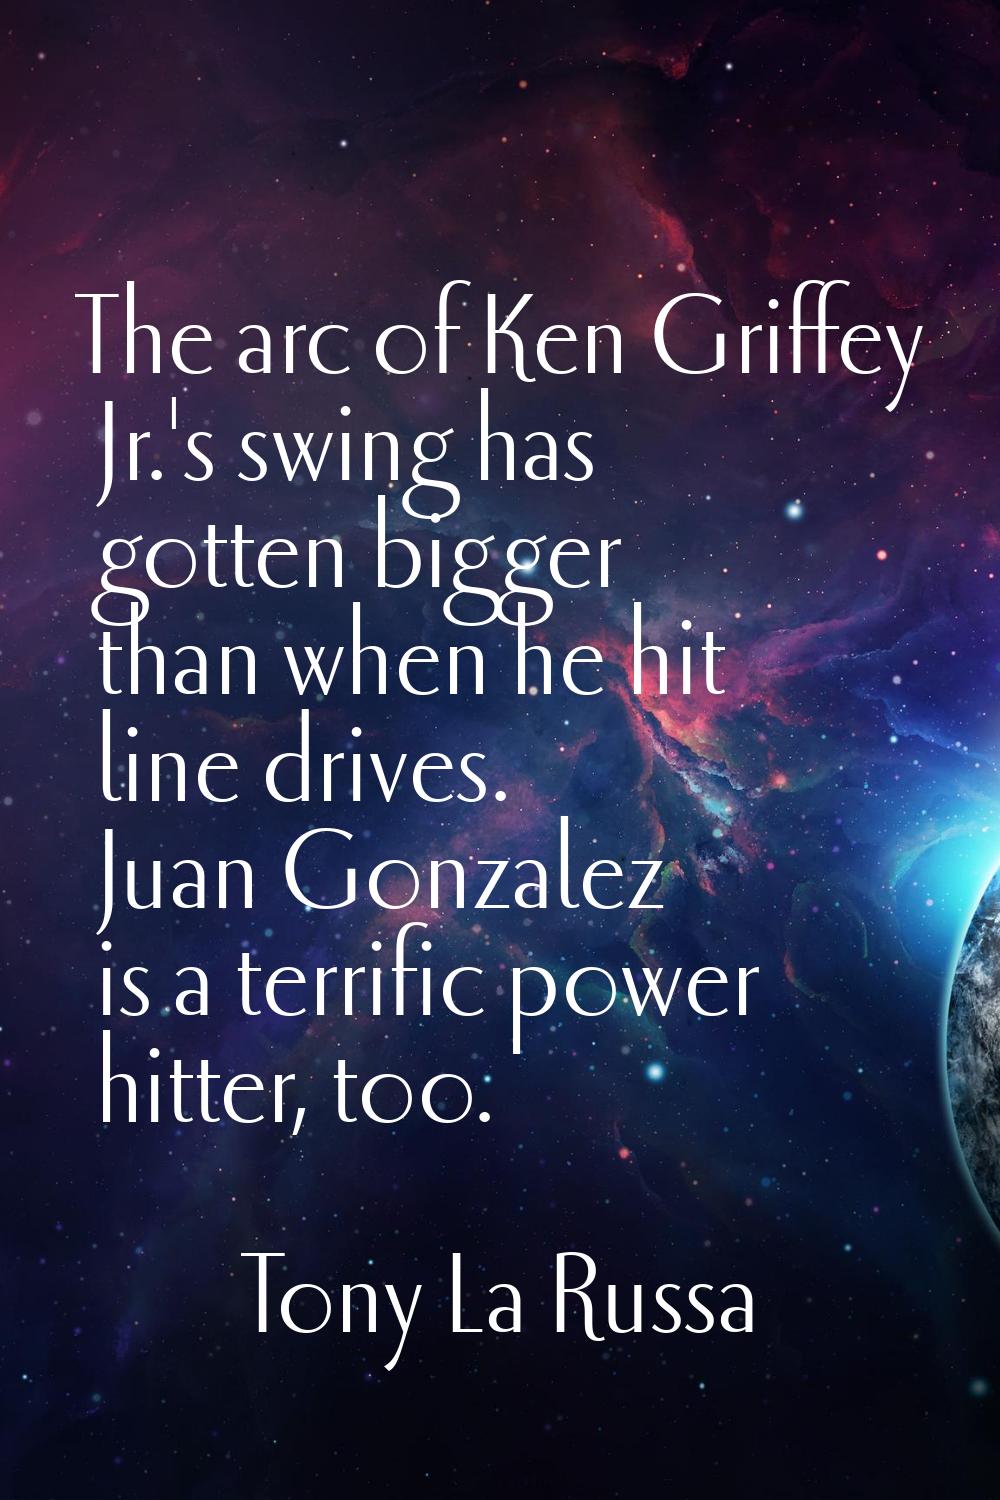 The arc of Ken Griffey Jr.'s swing has gotten bigger than when he hit line drives. Juan Gonzalez is